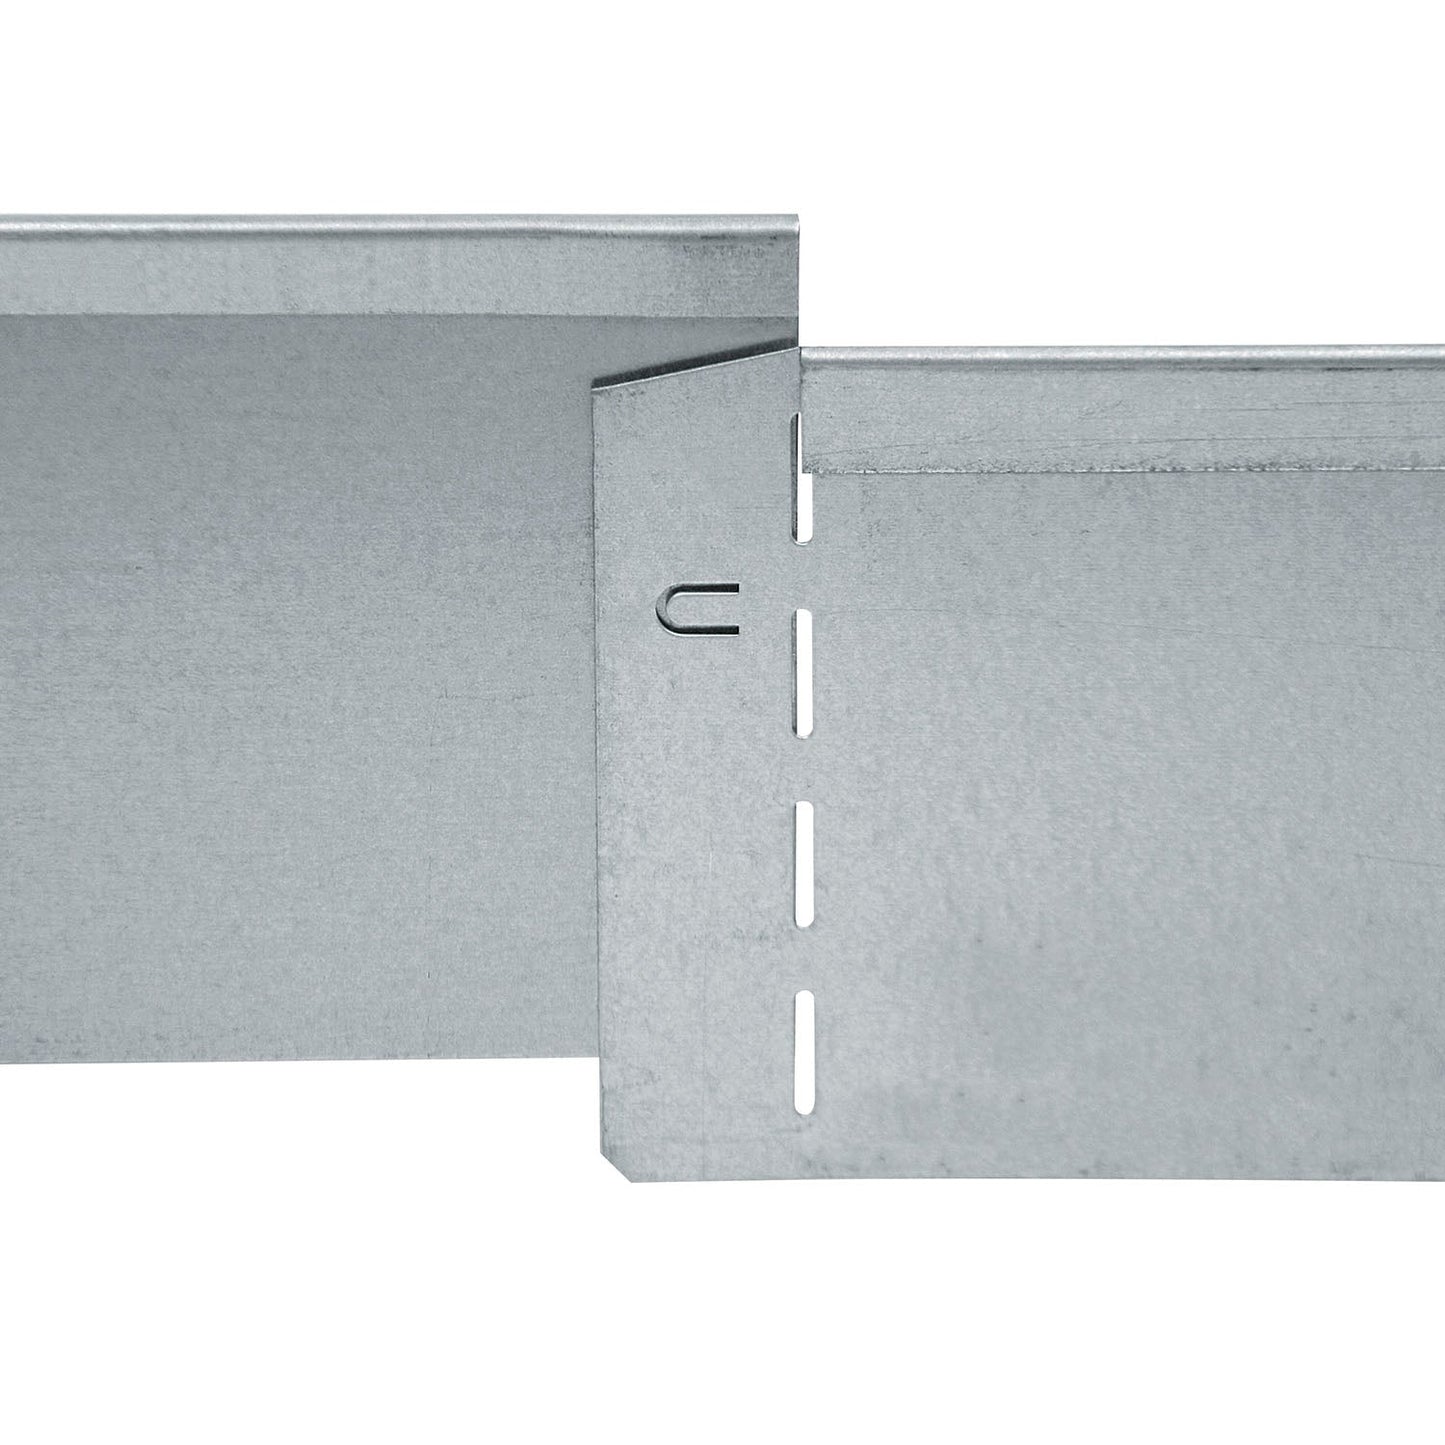 bellissa Rasenkante Metall verzinkt 118x12,5 cm, Nutzlänge 115 cm - 99680 - Rasenkante 24